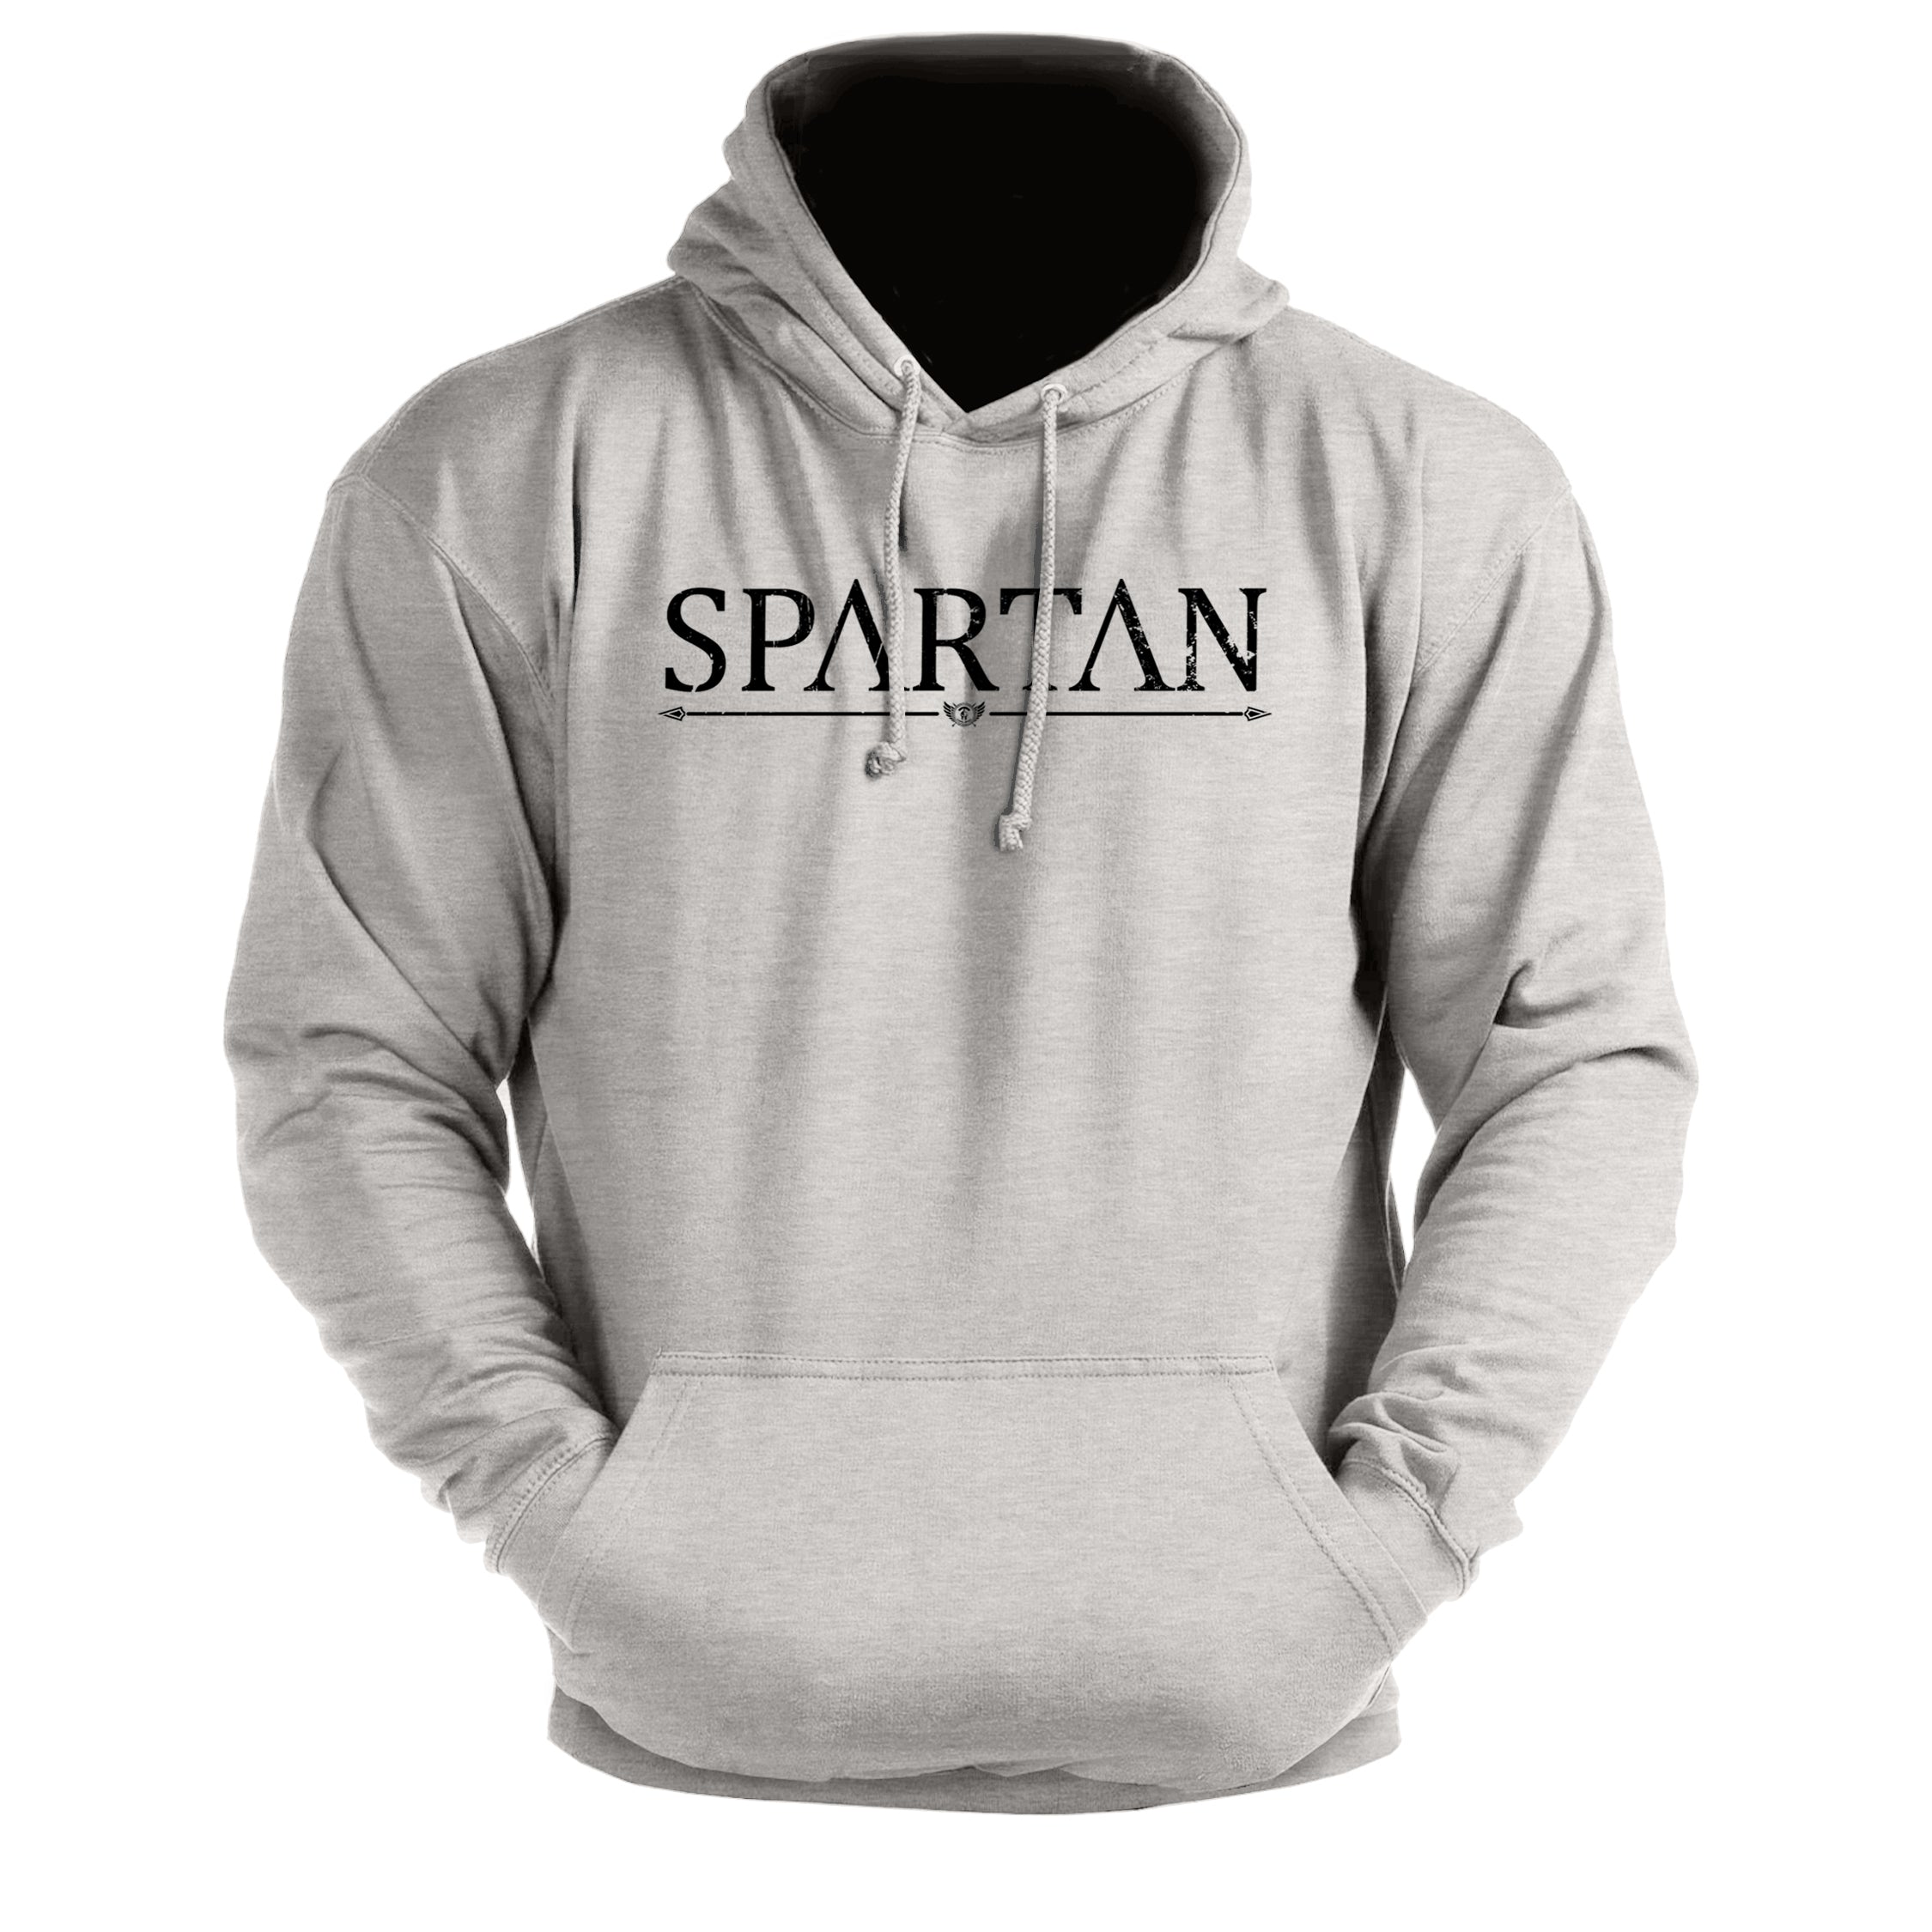 Spartan - Spartan Forged - Gym Hoodie